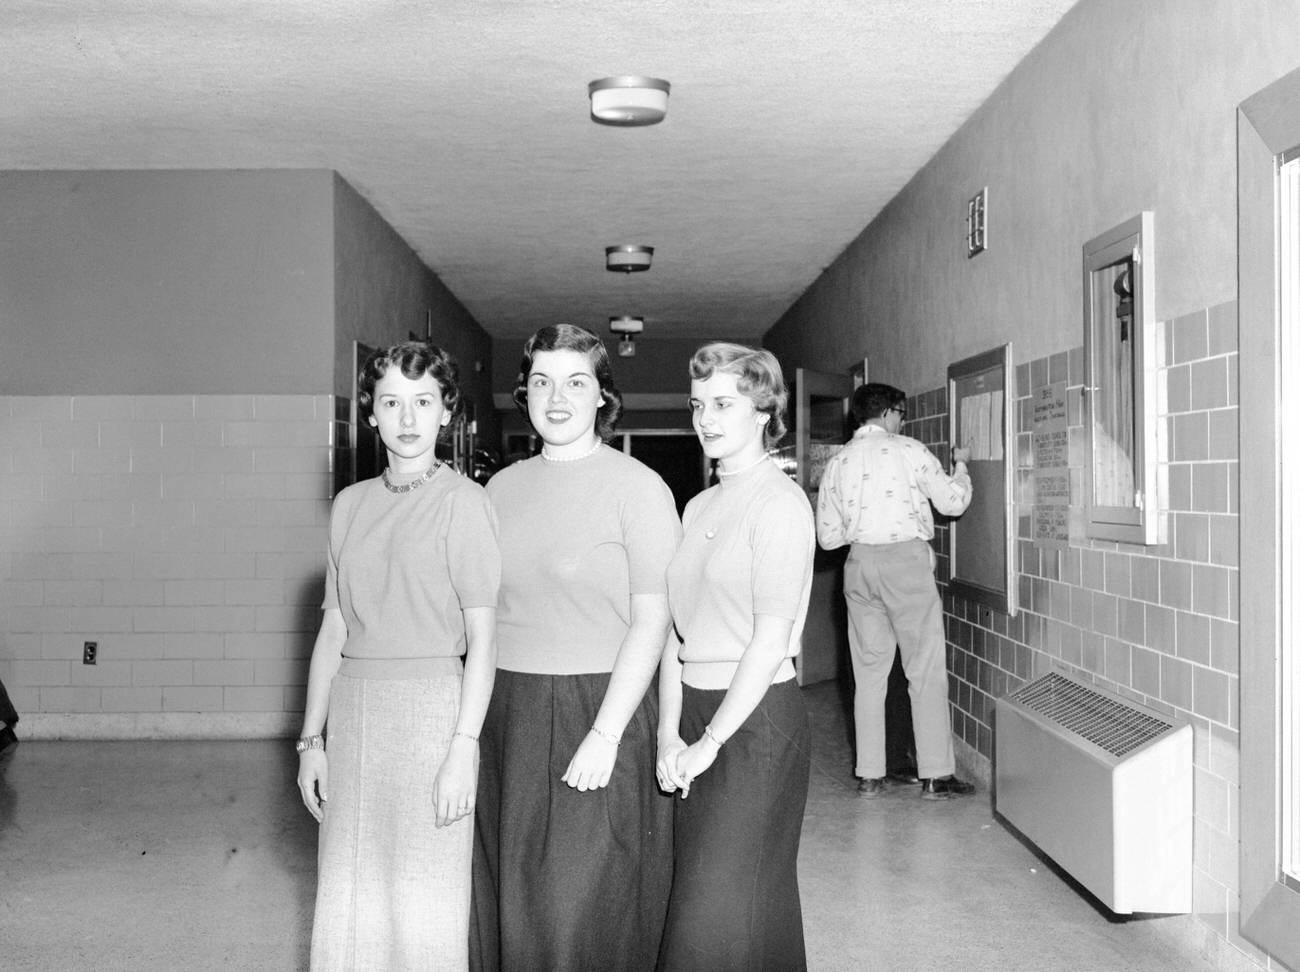 Three female students at Worthington High School by A. V. Shirk, circa 1955.